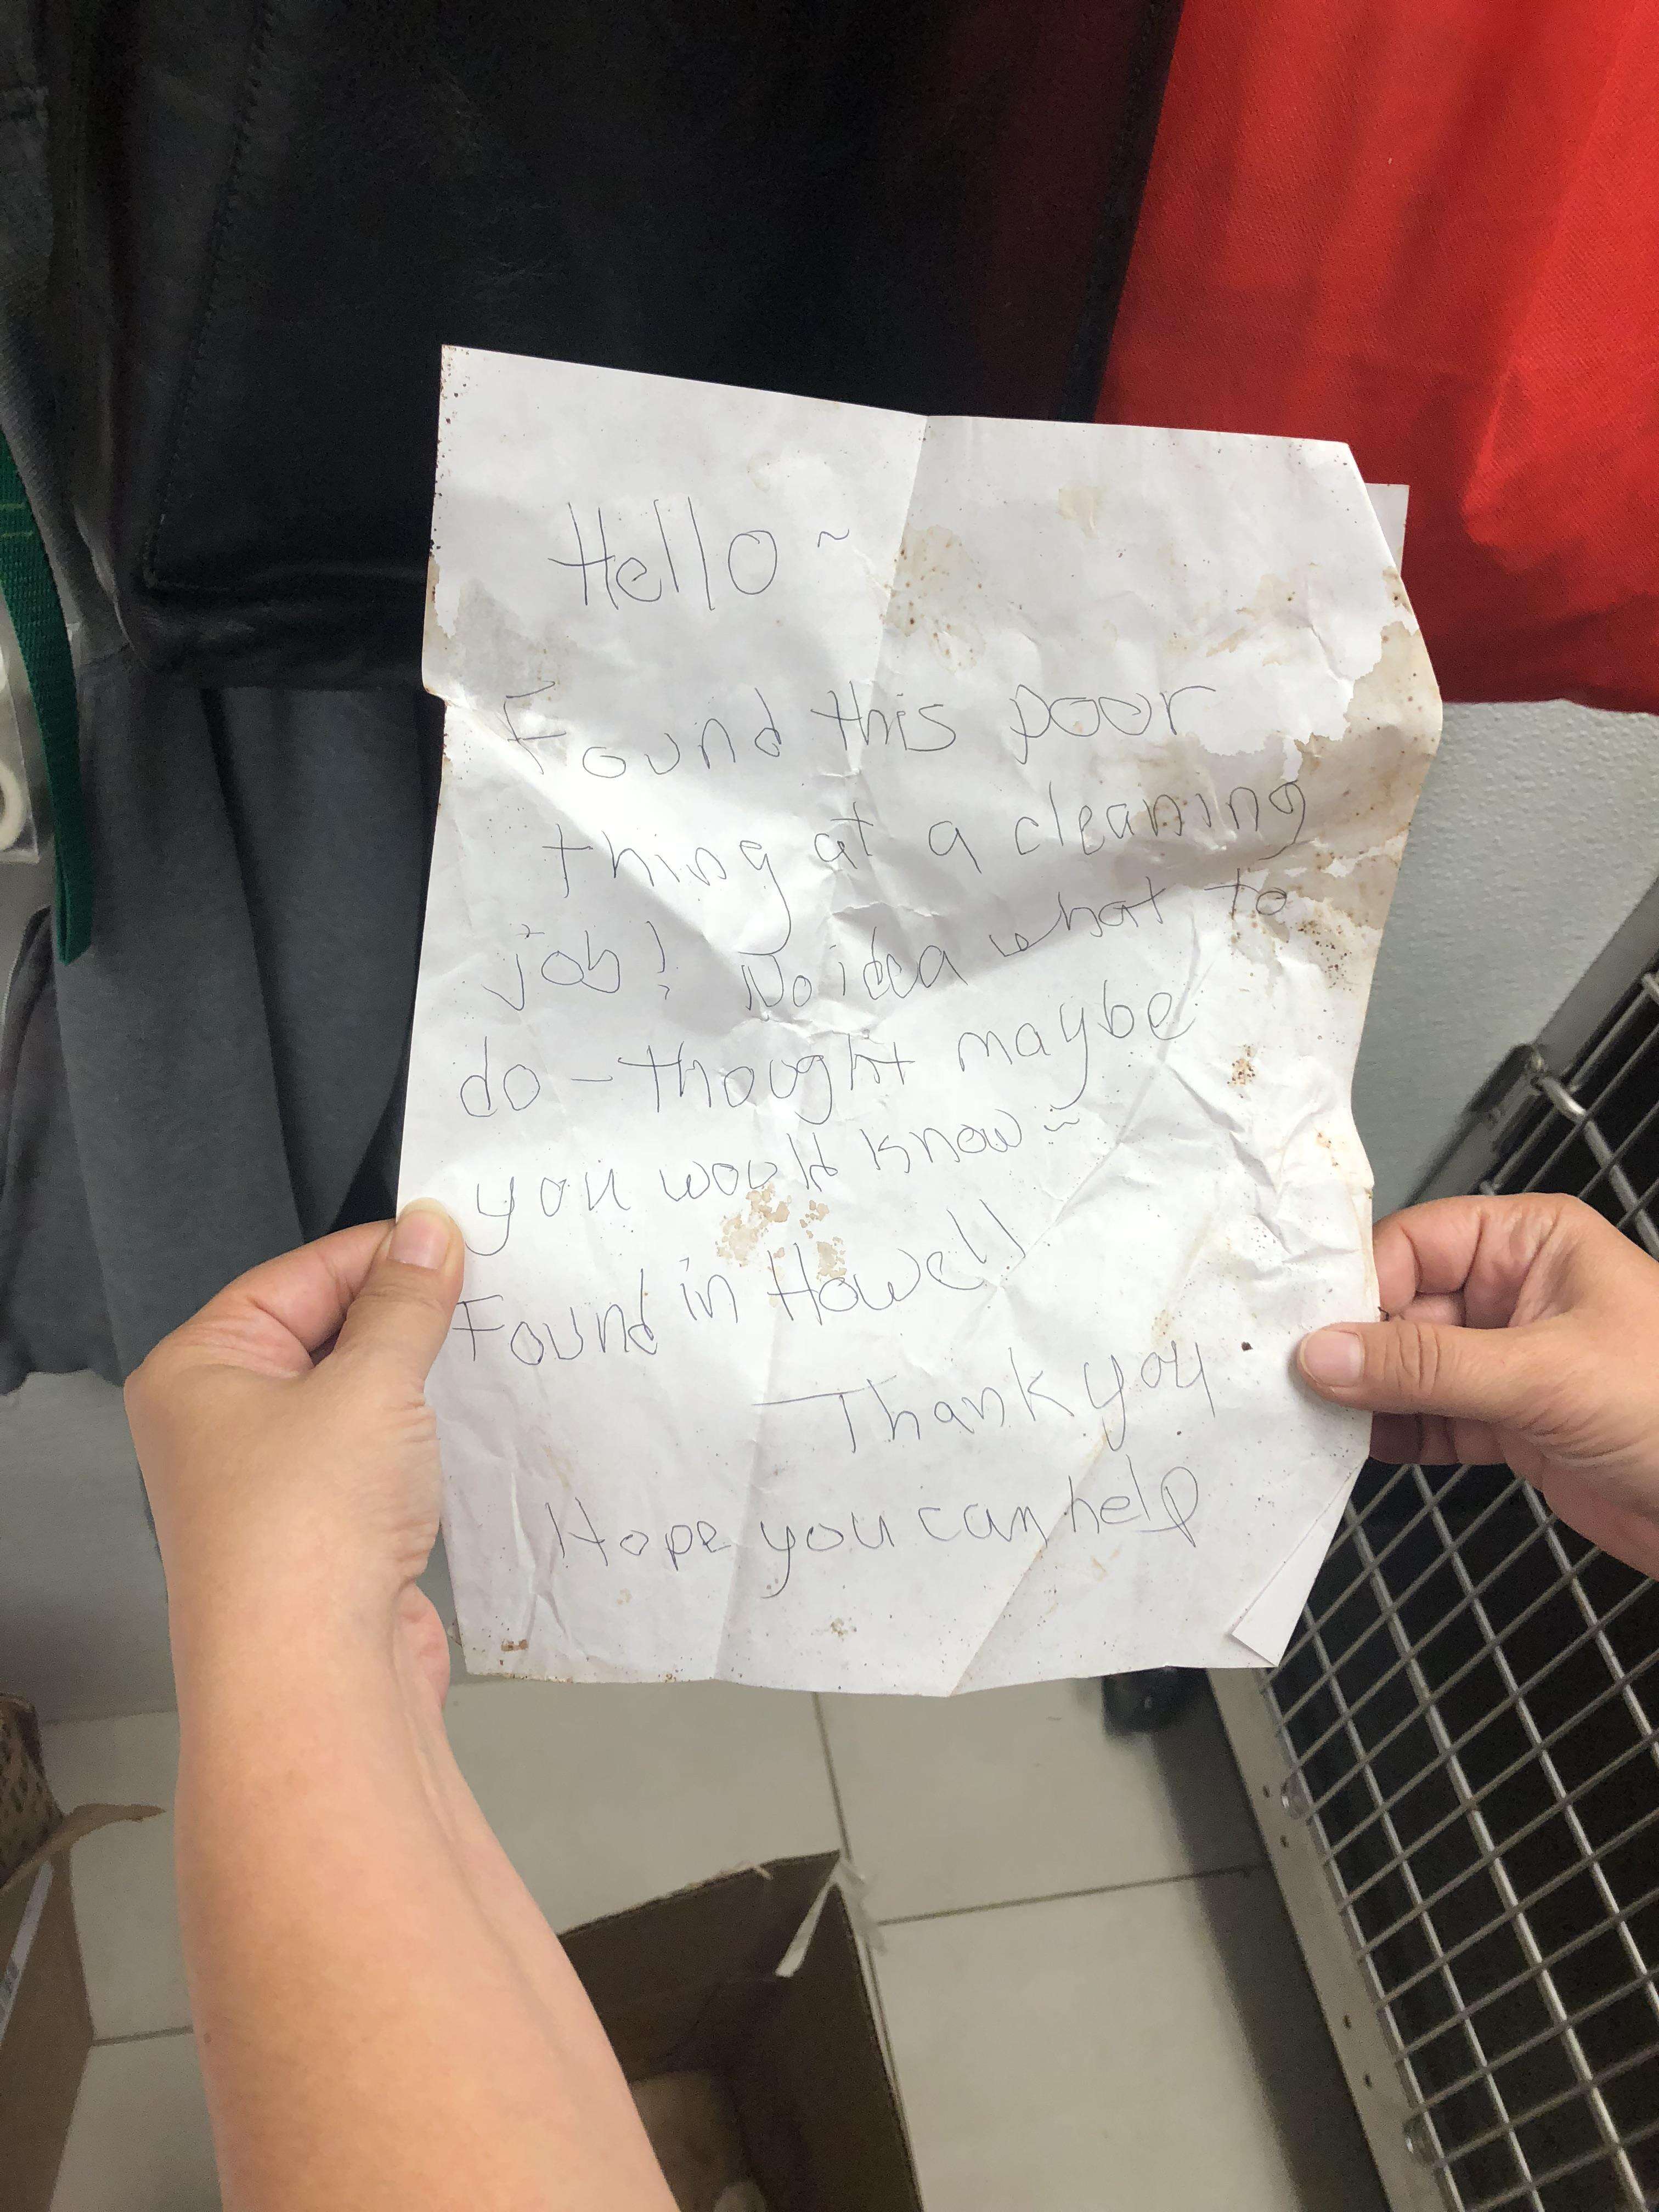 Note left under dog abandoned outside New Jersey shelter